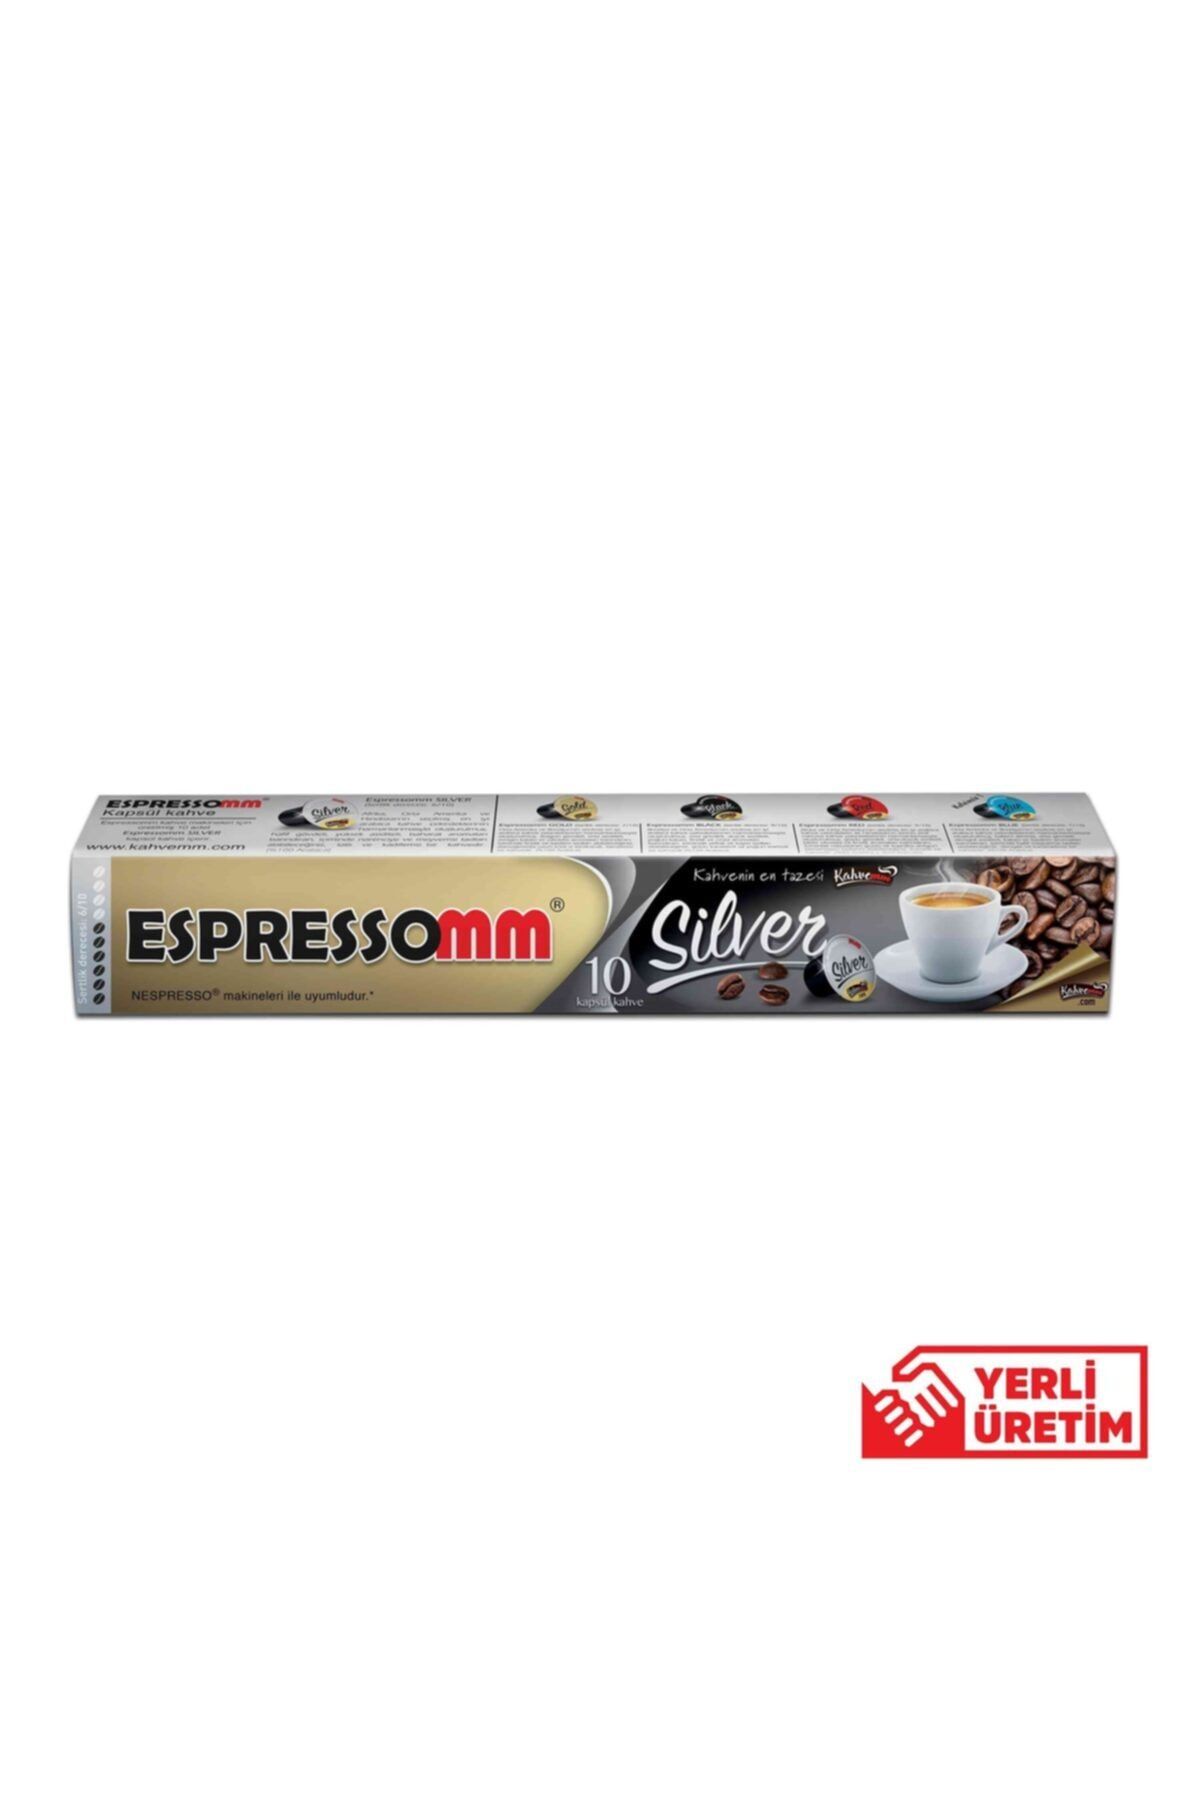 ESPRESSOMM Nespresso Uyumlu Silver Kapsül Kahve (10 ADET)